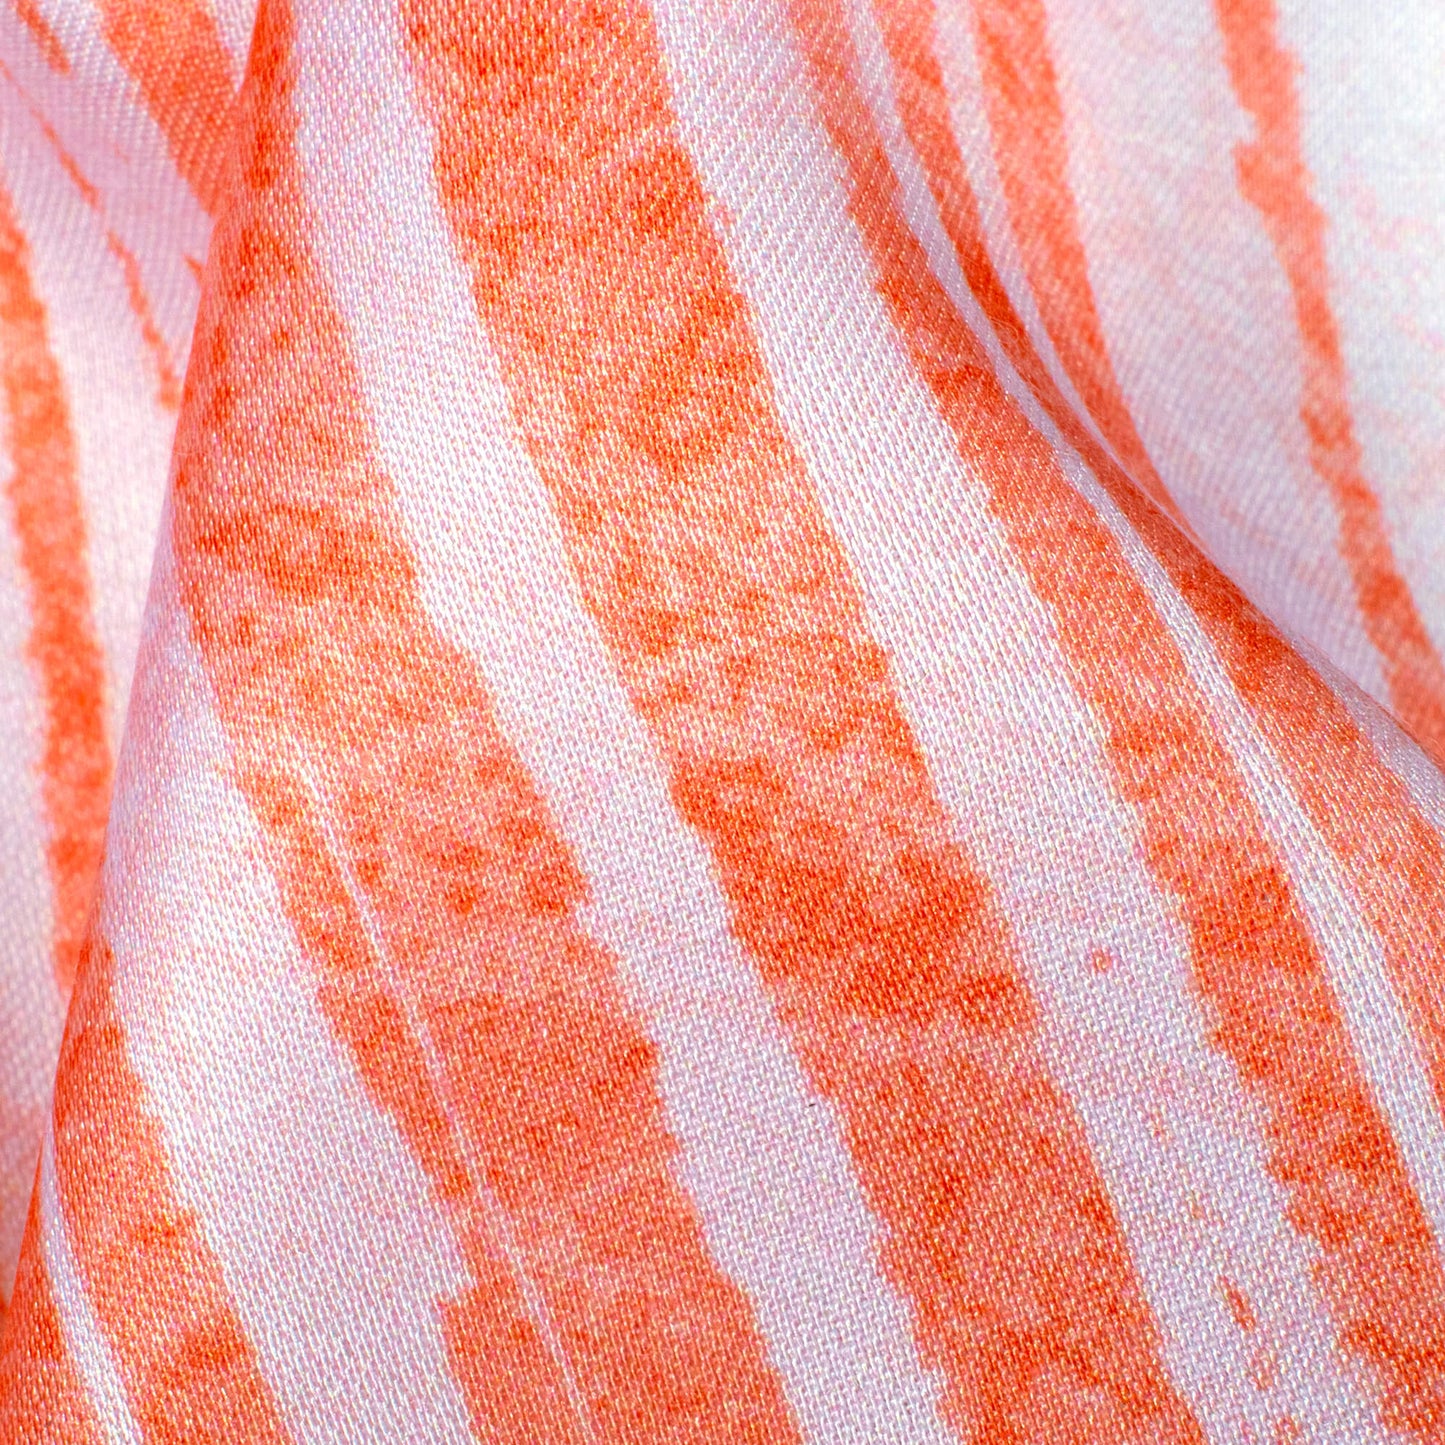 Coral Peach And White Abstract Pattern Digital Print Premium Lush Satin Fabric